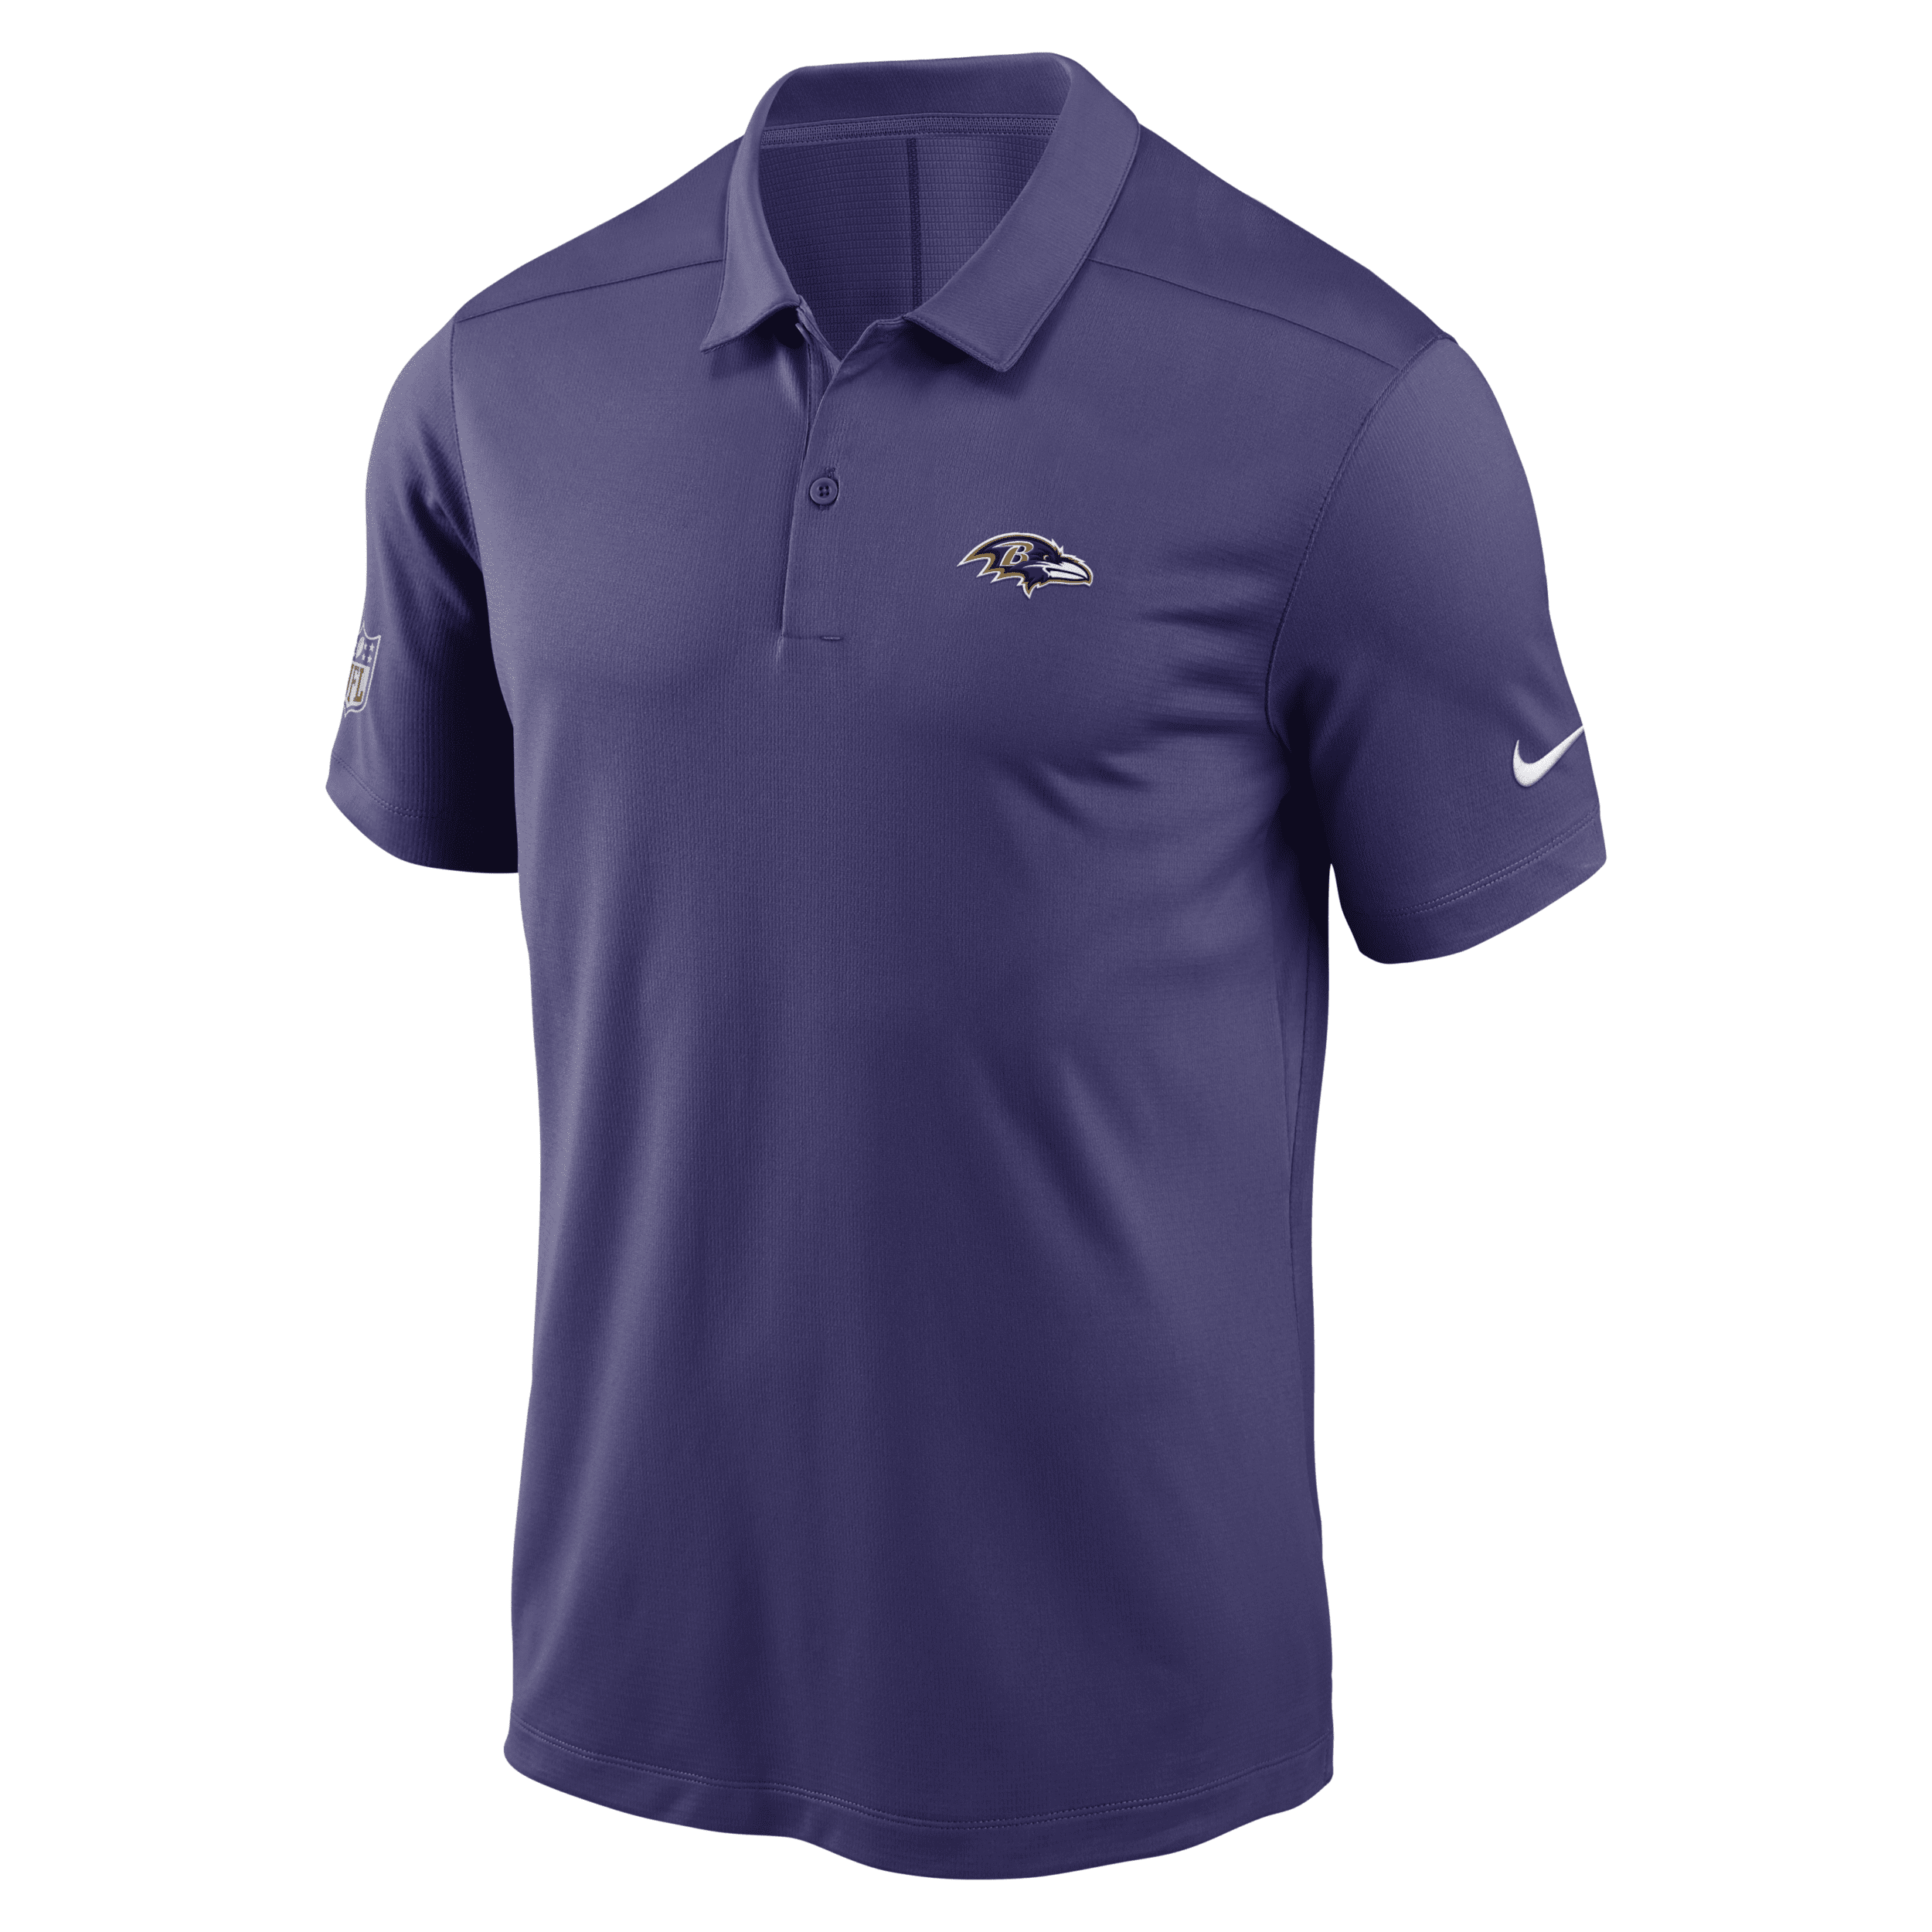 Nike Men's Dri-fit Sideline Victory (nfl Baltimore Ravens) Polo In Purple